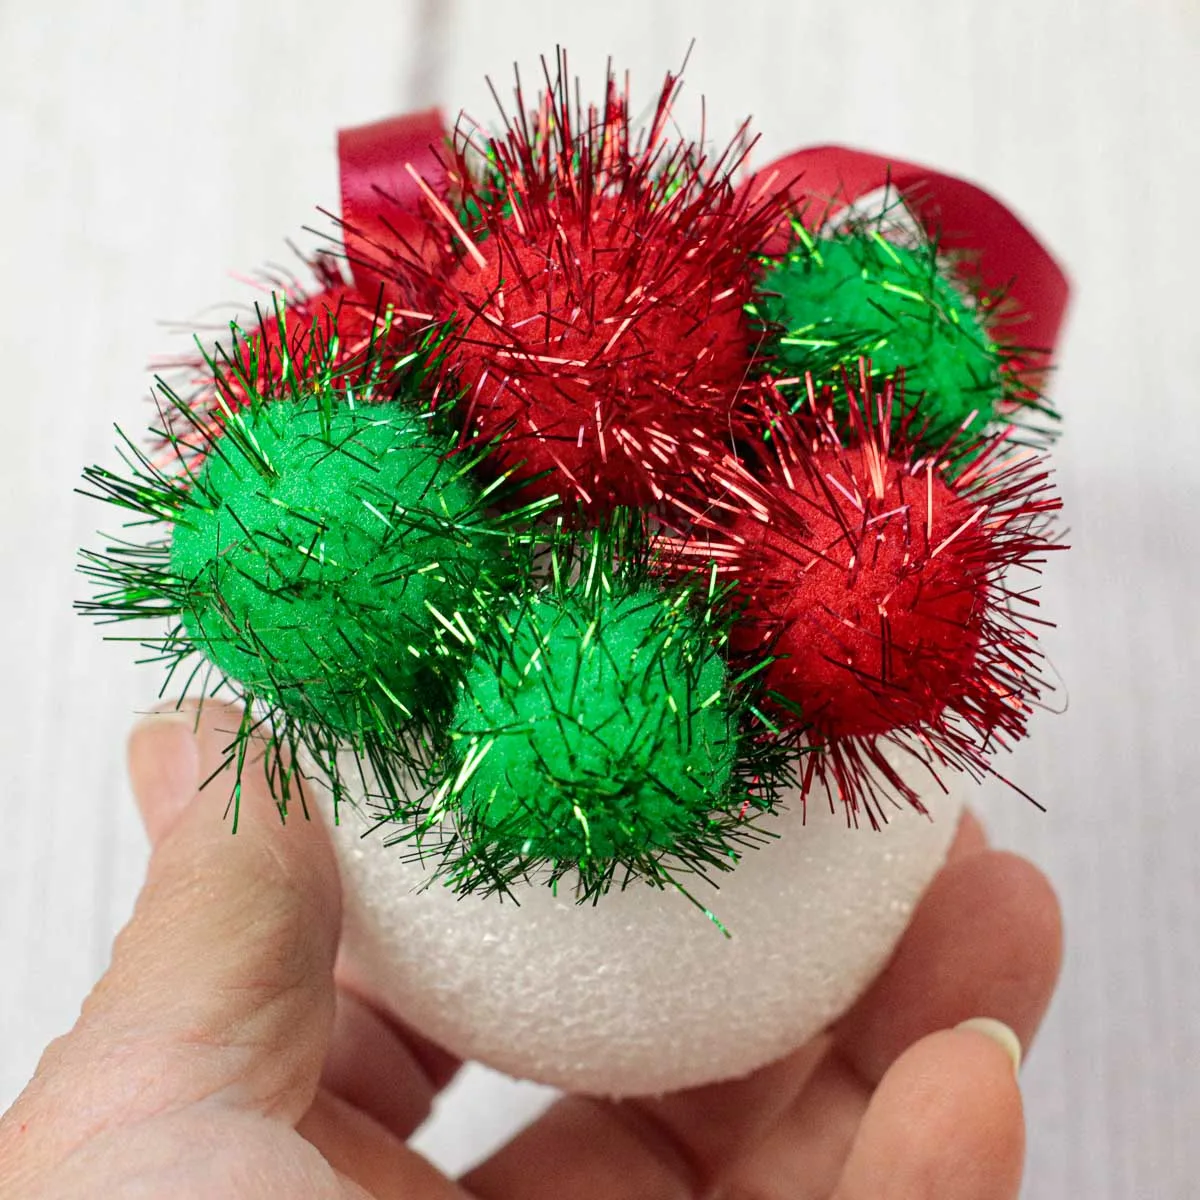 A few Christmas pom poms glued to a Styrofoam ball.